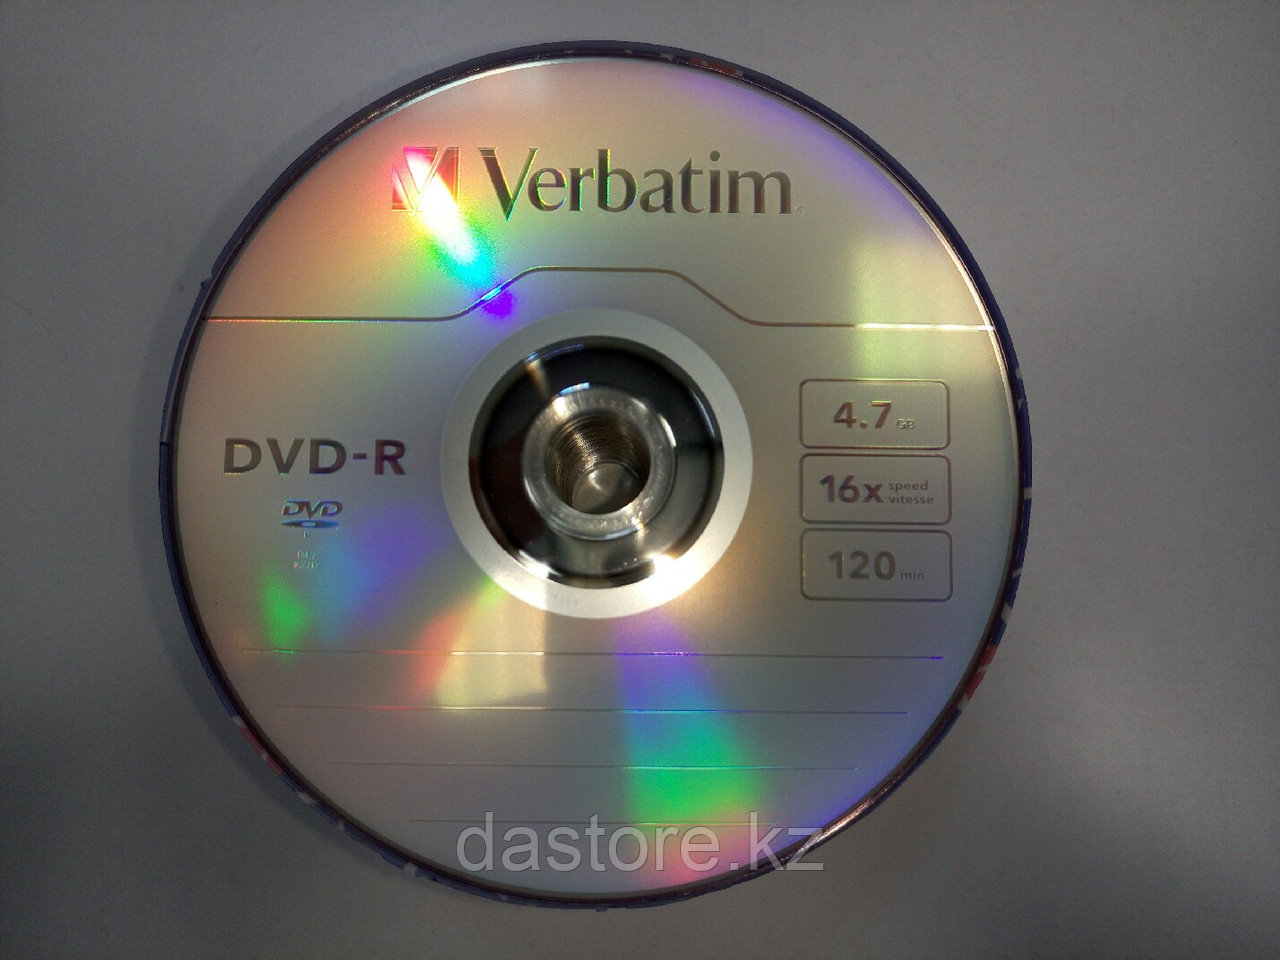 Verbatim DVD-R диск (болванка), 4,7 Гб. 16х, 120 мин.